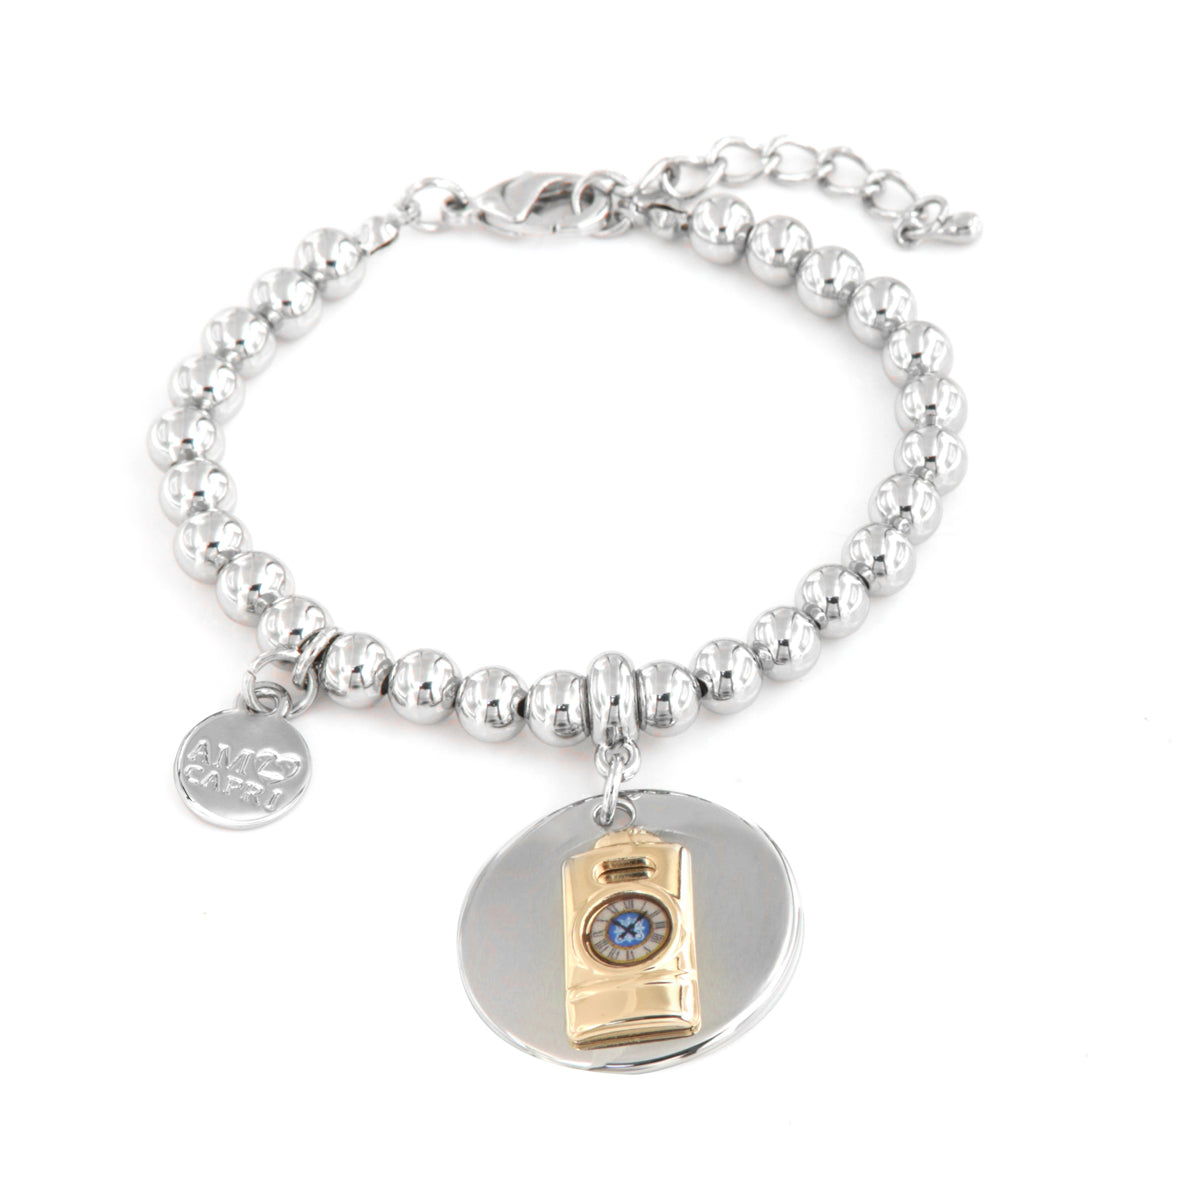 Metal bracelet spheres shirt, with a capri clock tower symbol medallion.